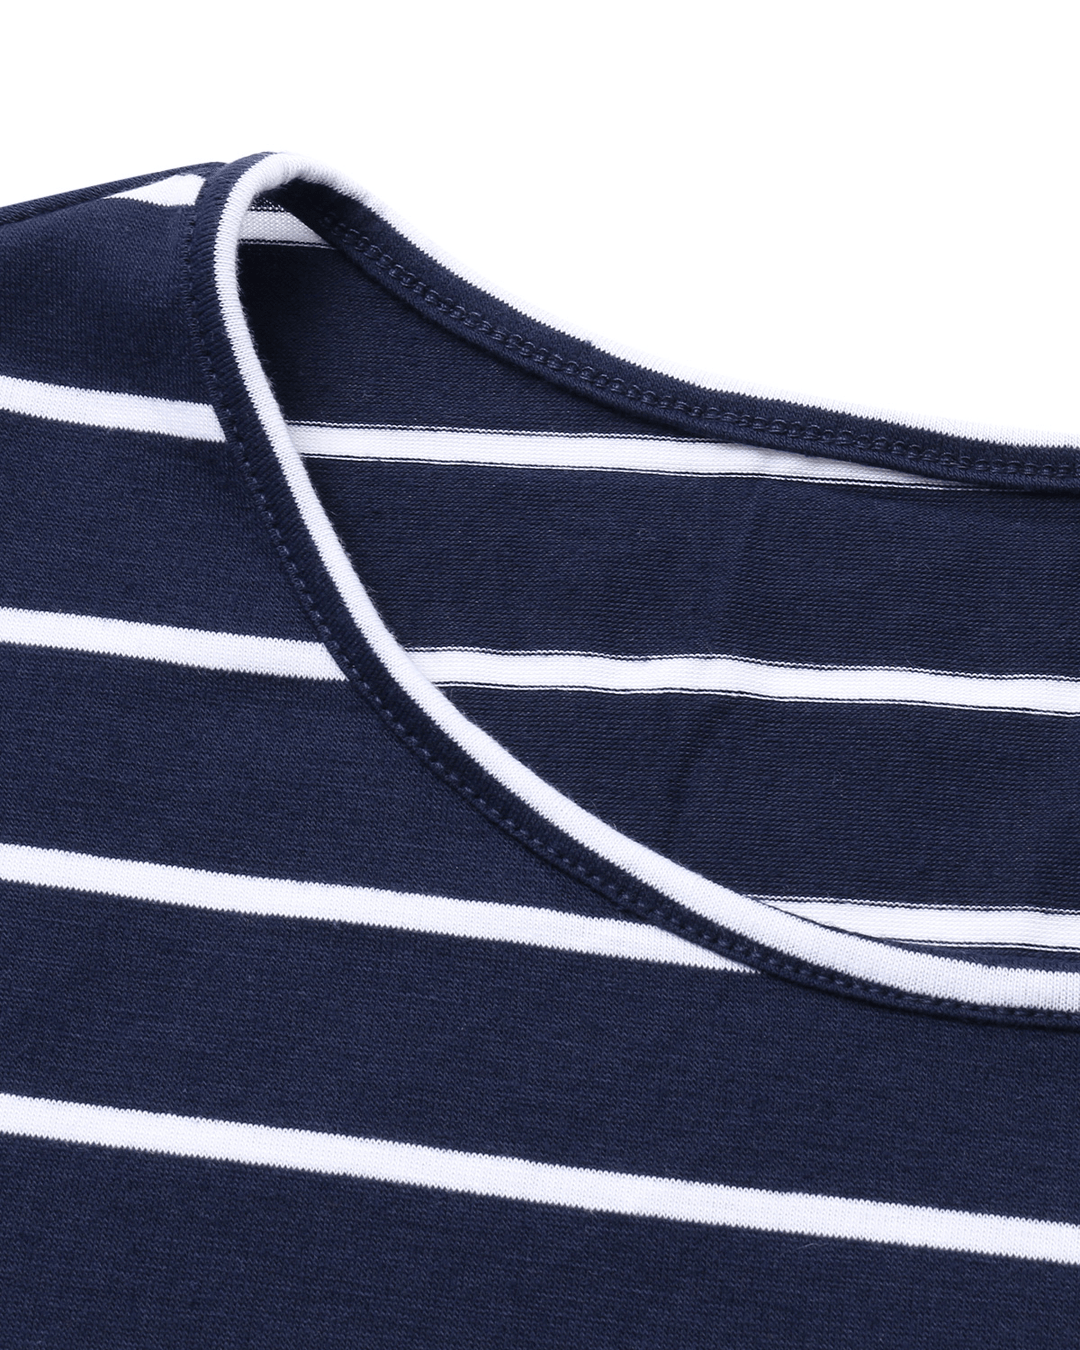 Striped O-Neck Short Sleeve Casual Summer Mini Shirt Dress - MRSLM